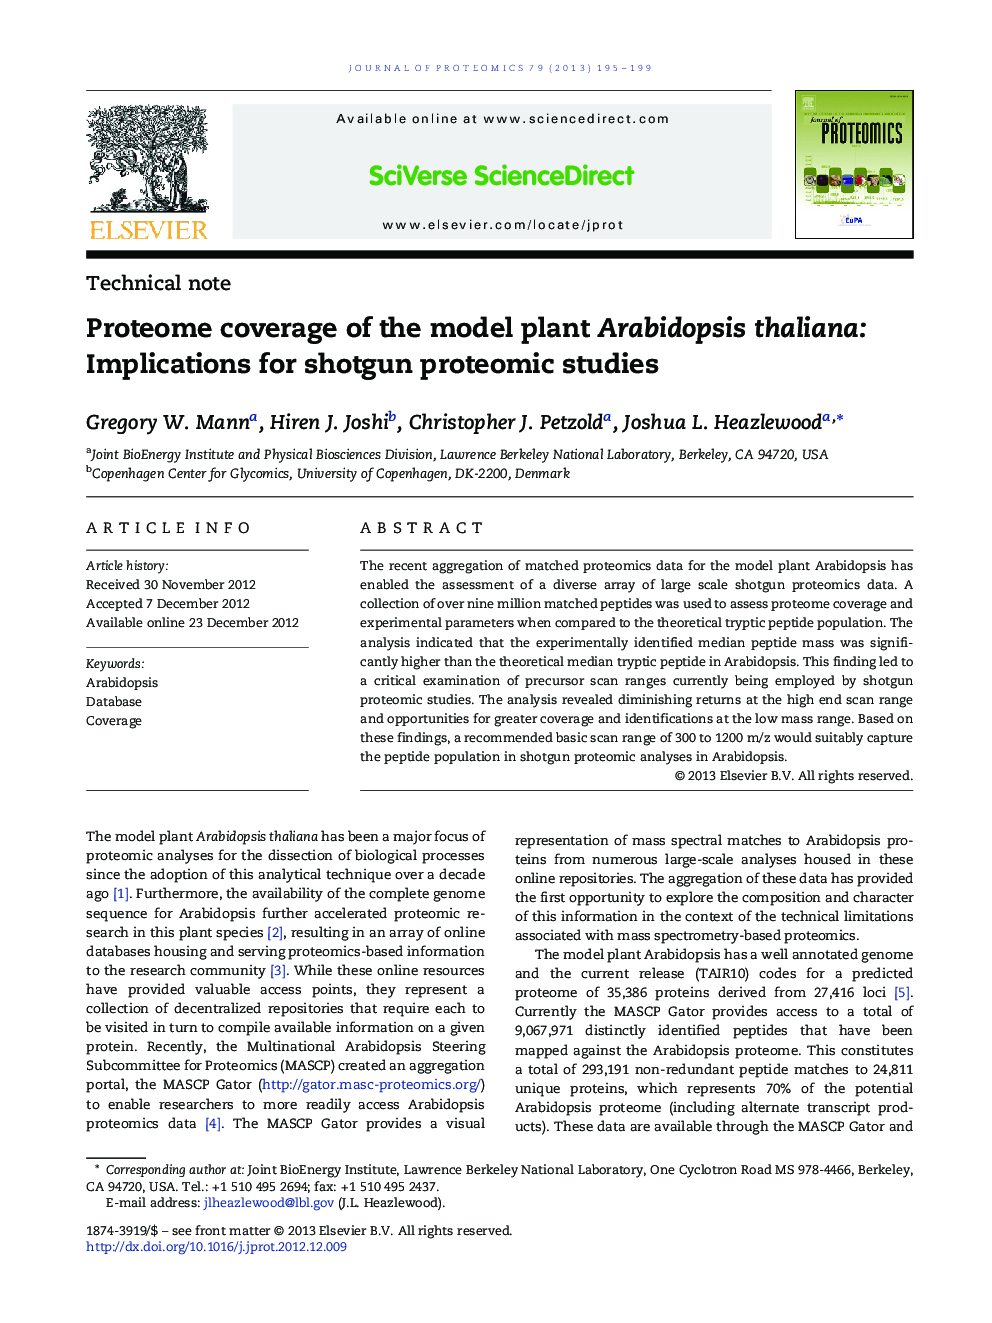 Proteome coverage of the model plant Arabidopsis thaliana: Implications for shotgun proteomic studies